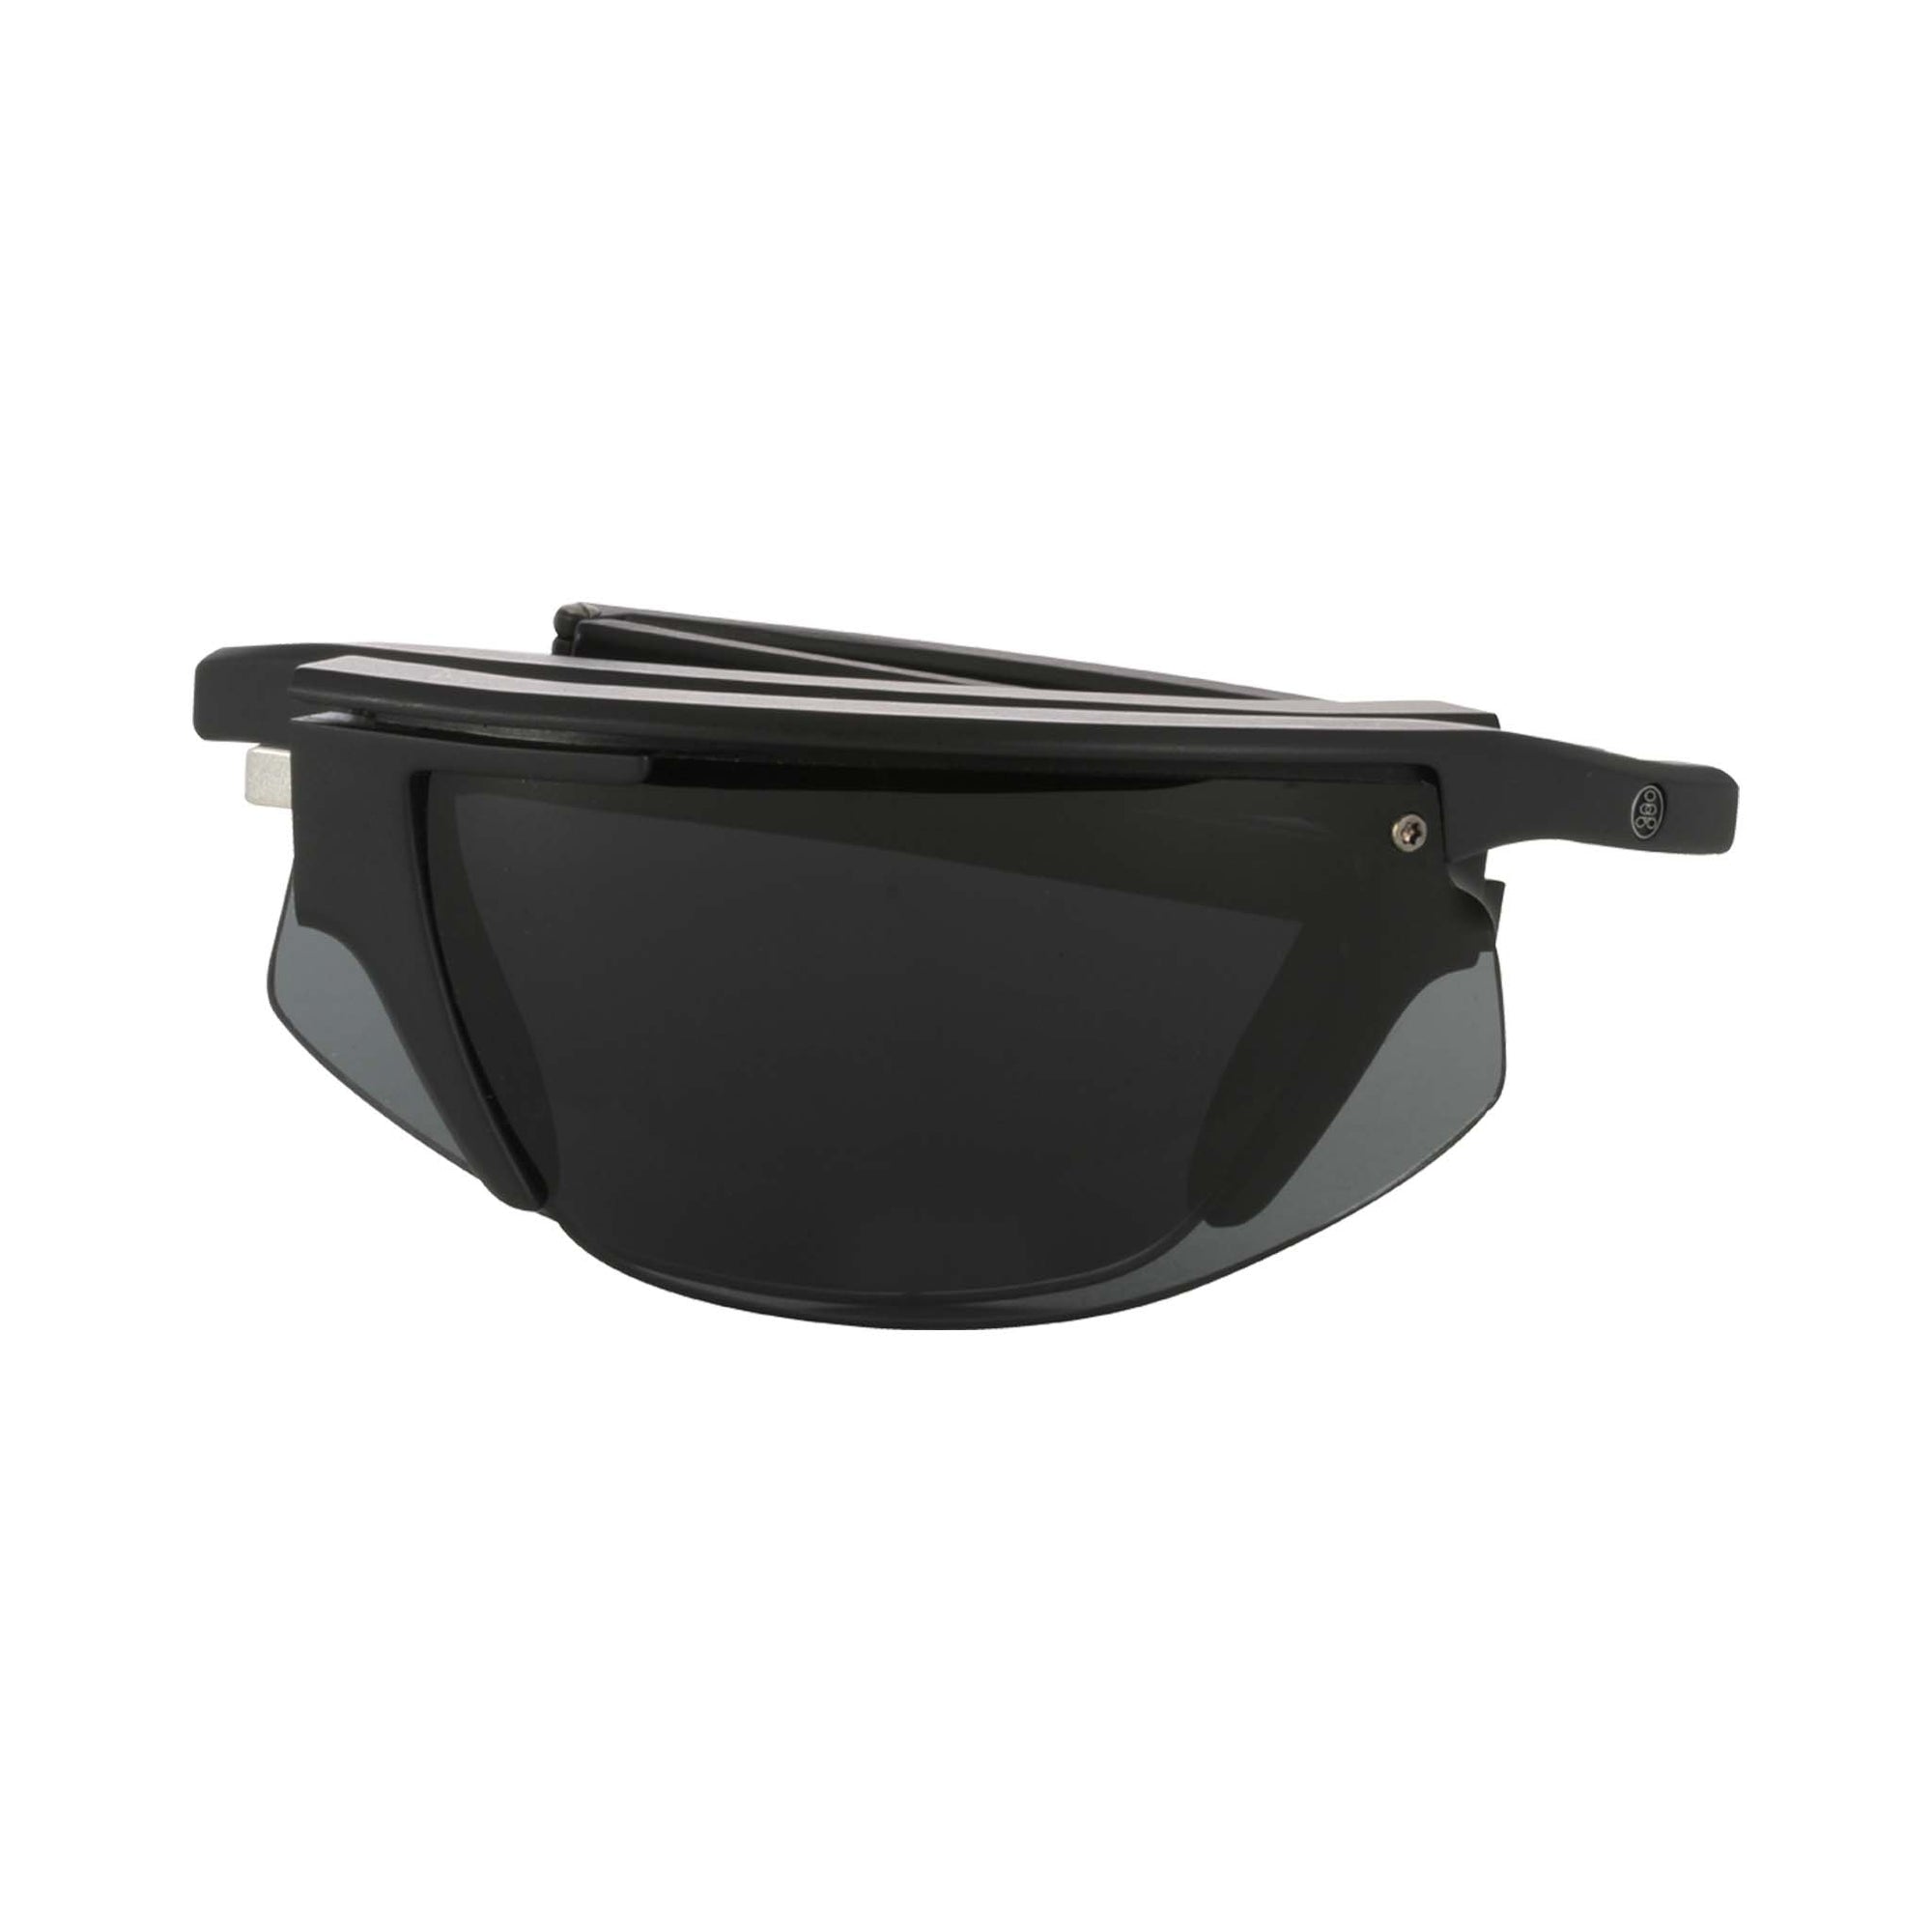 Popticals, Premium Compact Sunglasses, PopStar, 010040-BMGP, Polarized Sunglasses, Matte Black Frame, Gray Lenses, Compact View